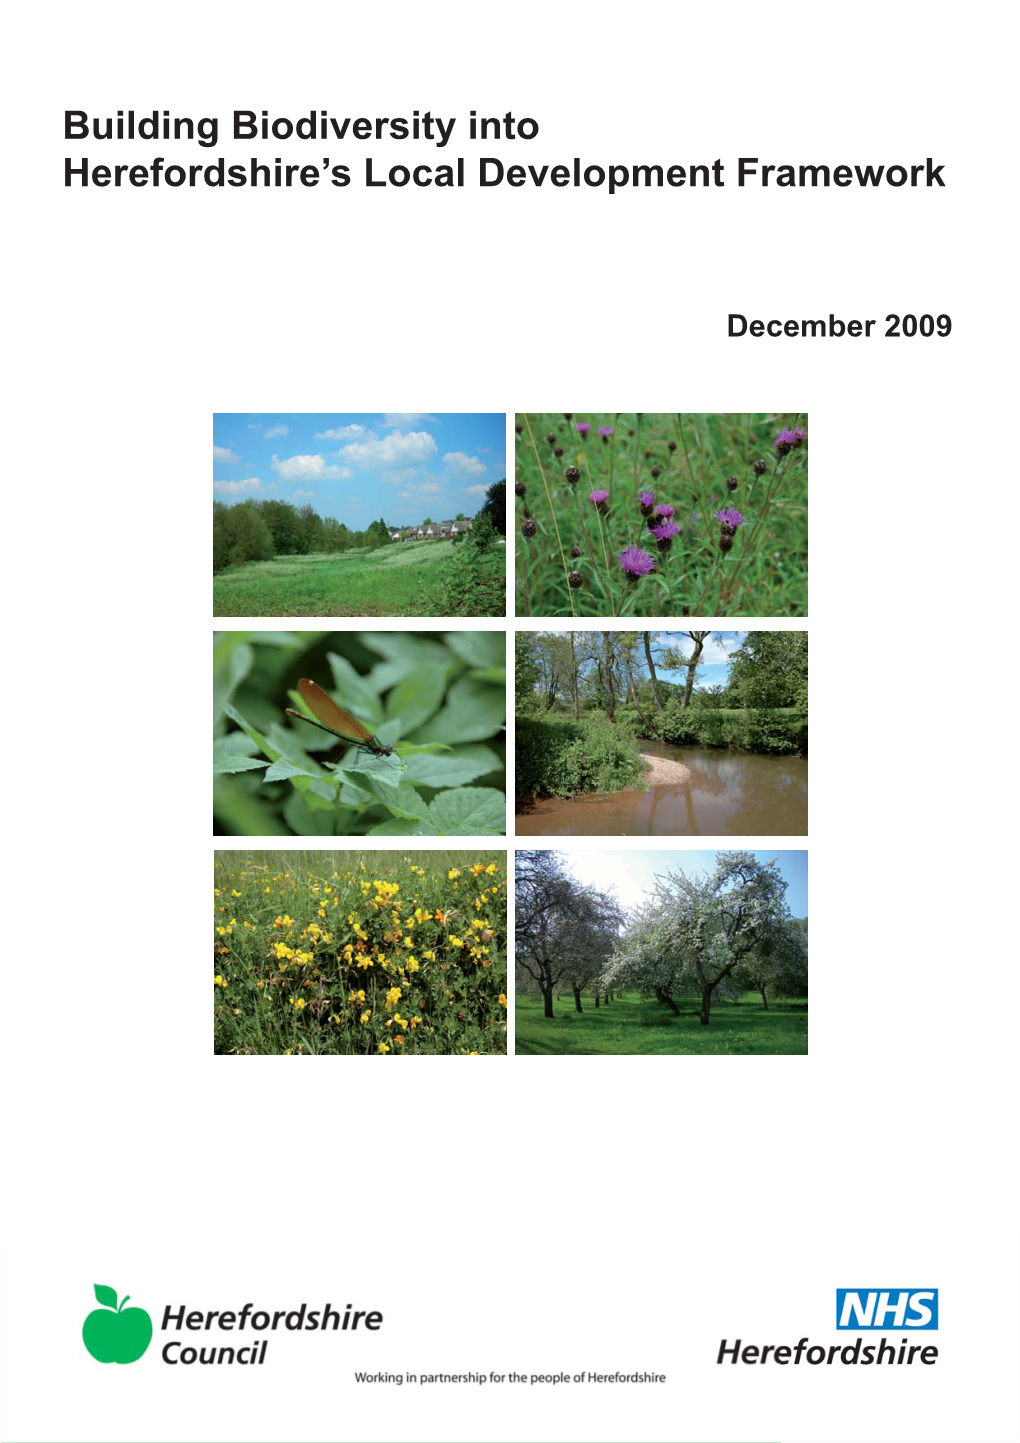 Building Biodiversity in Herefordshire's Local Development Framework